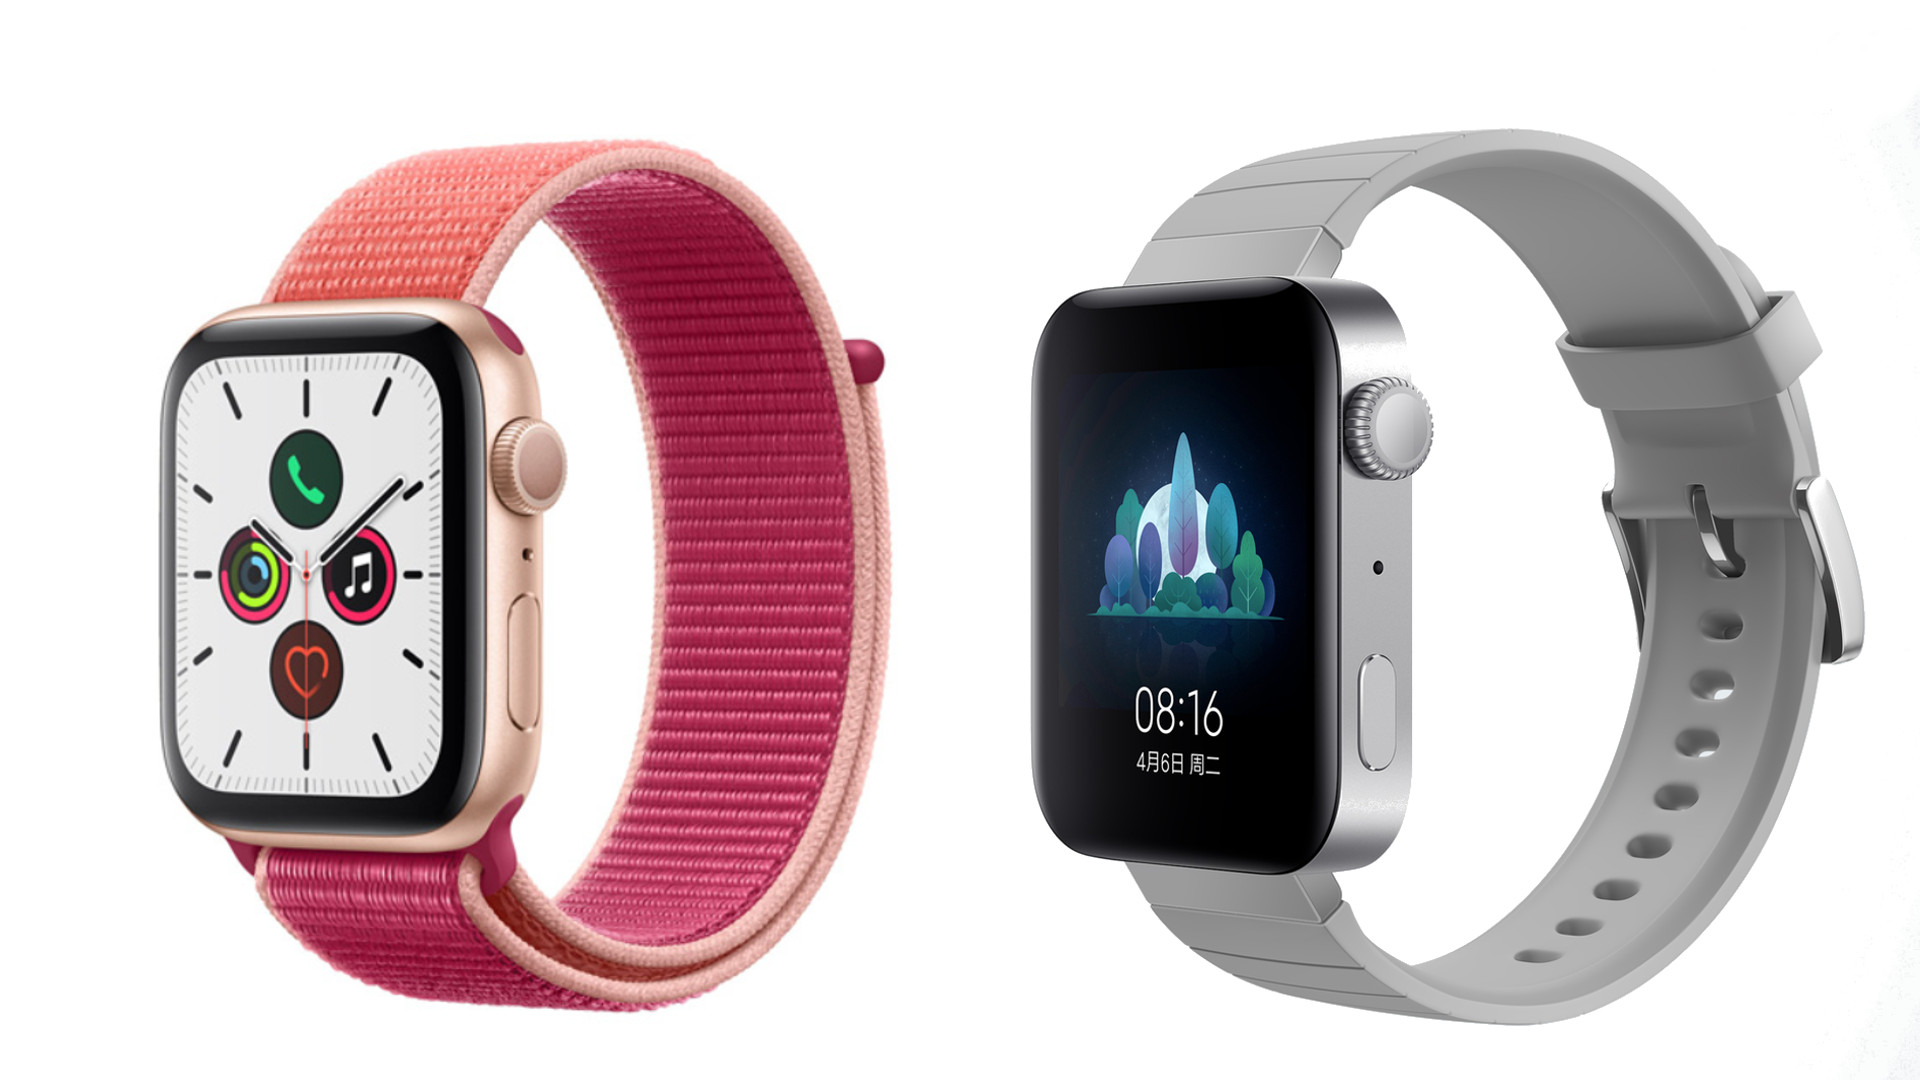 The Apple Watch versus the Mi Watch.